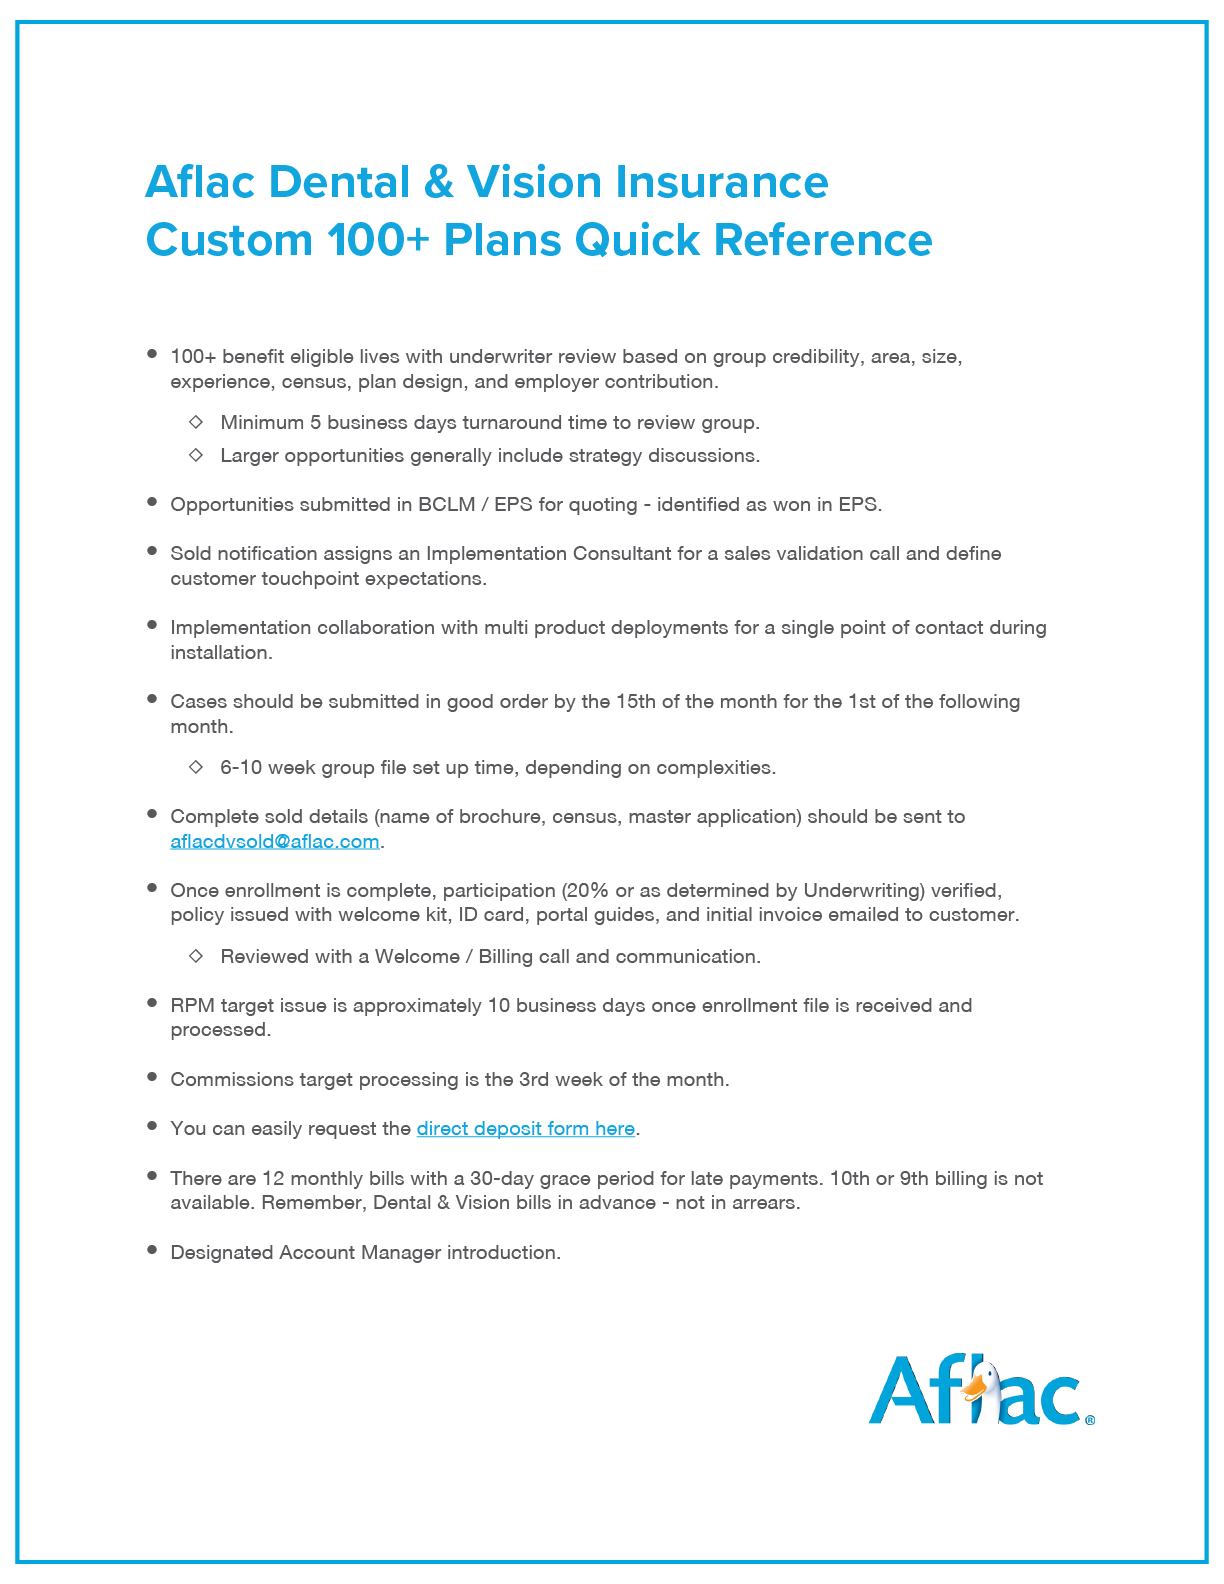 custom100-plans